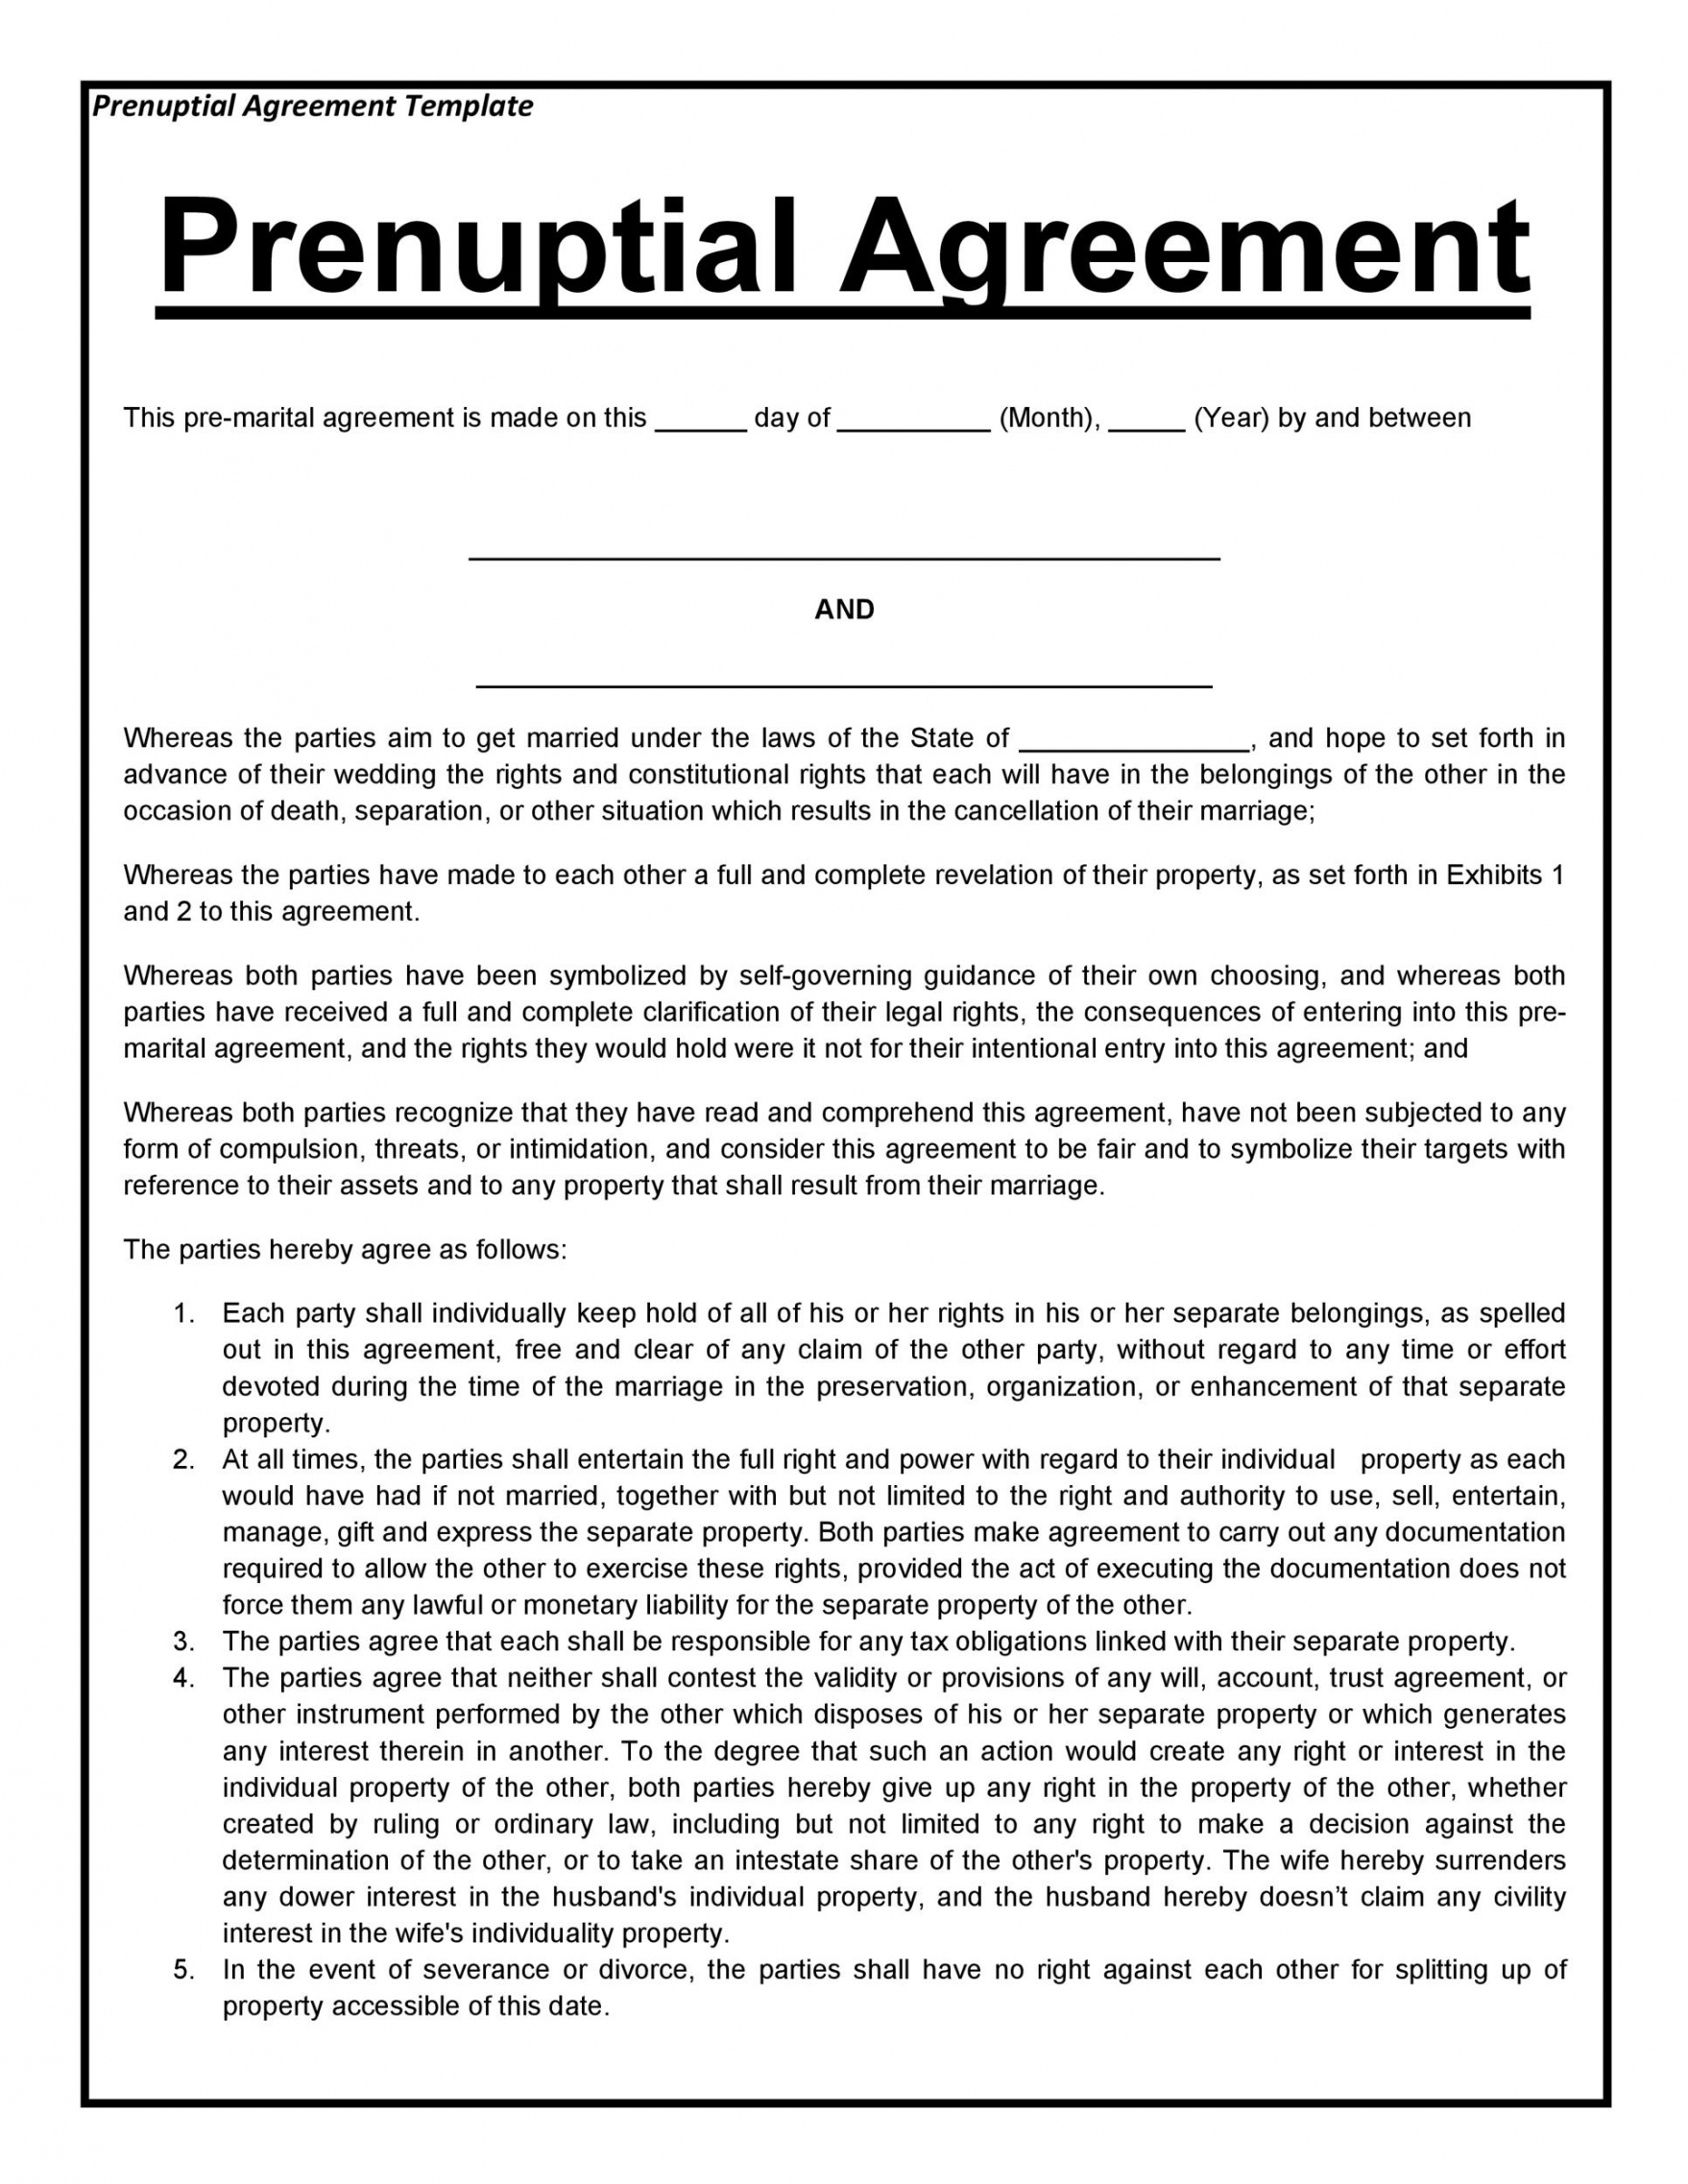 Printable 30 Prenuptial Agreement Samples & Forms ᐅ Templatelab